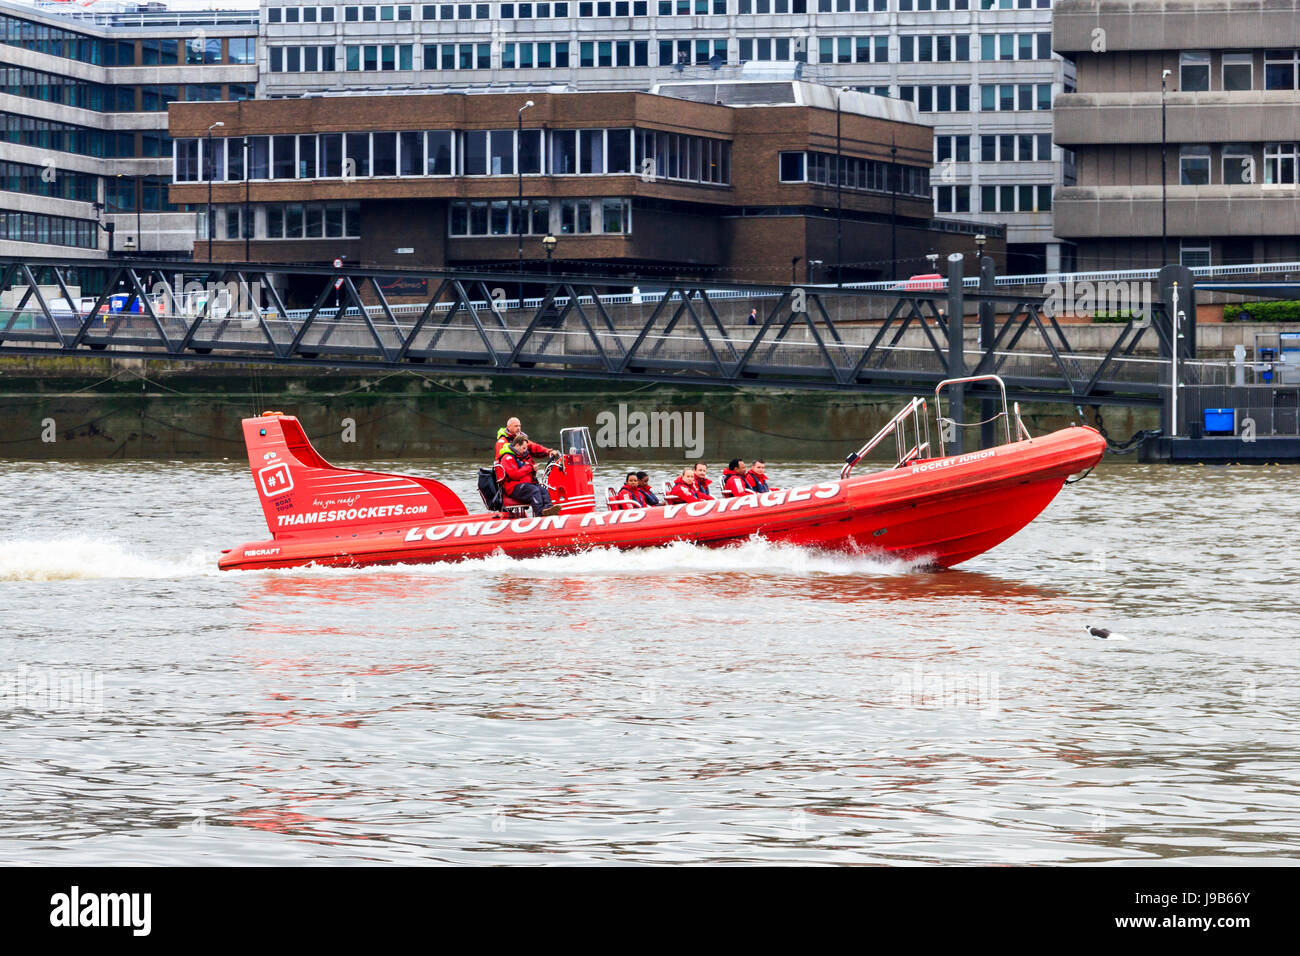 Red high speed' London Rippe Voyages' Schiff auf der Themse in Blackfriars, London, UK Stockfoto